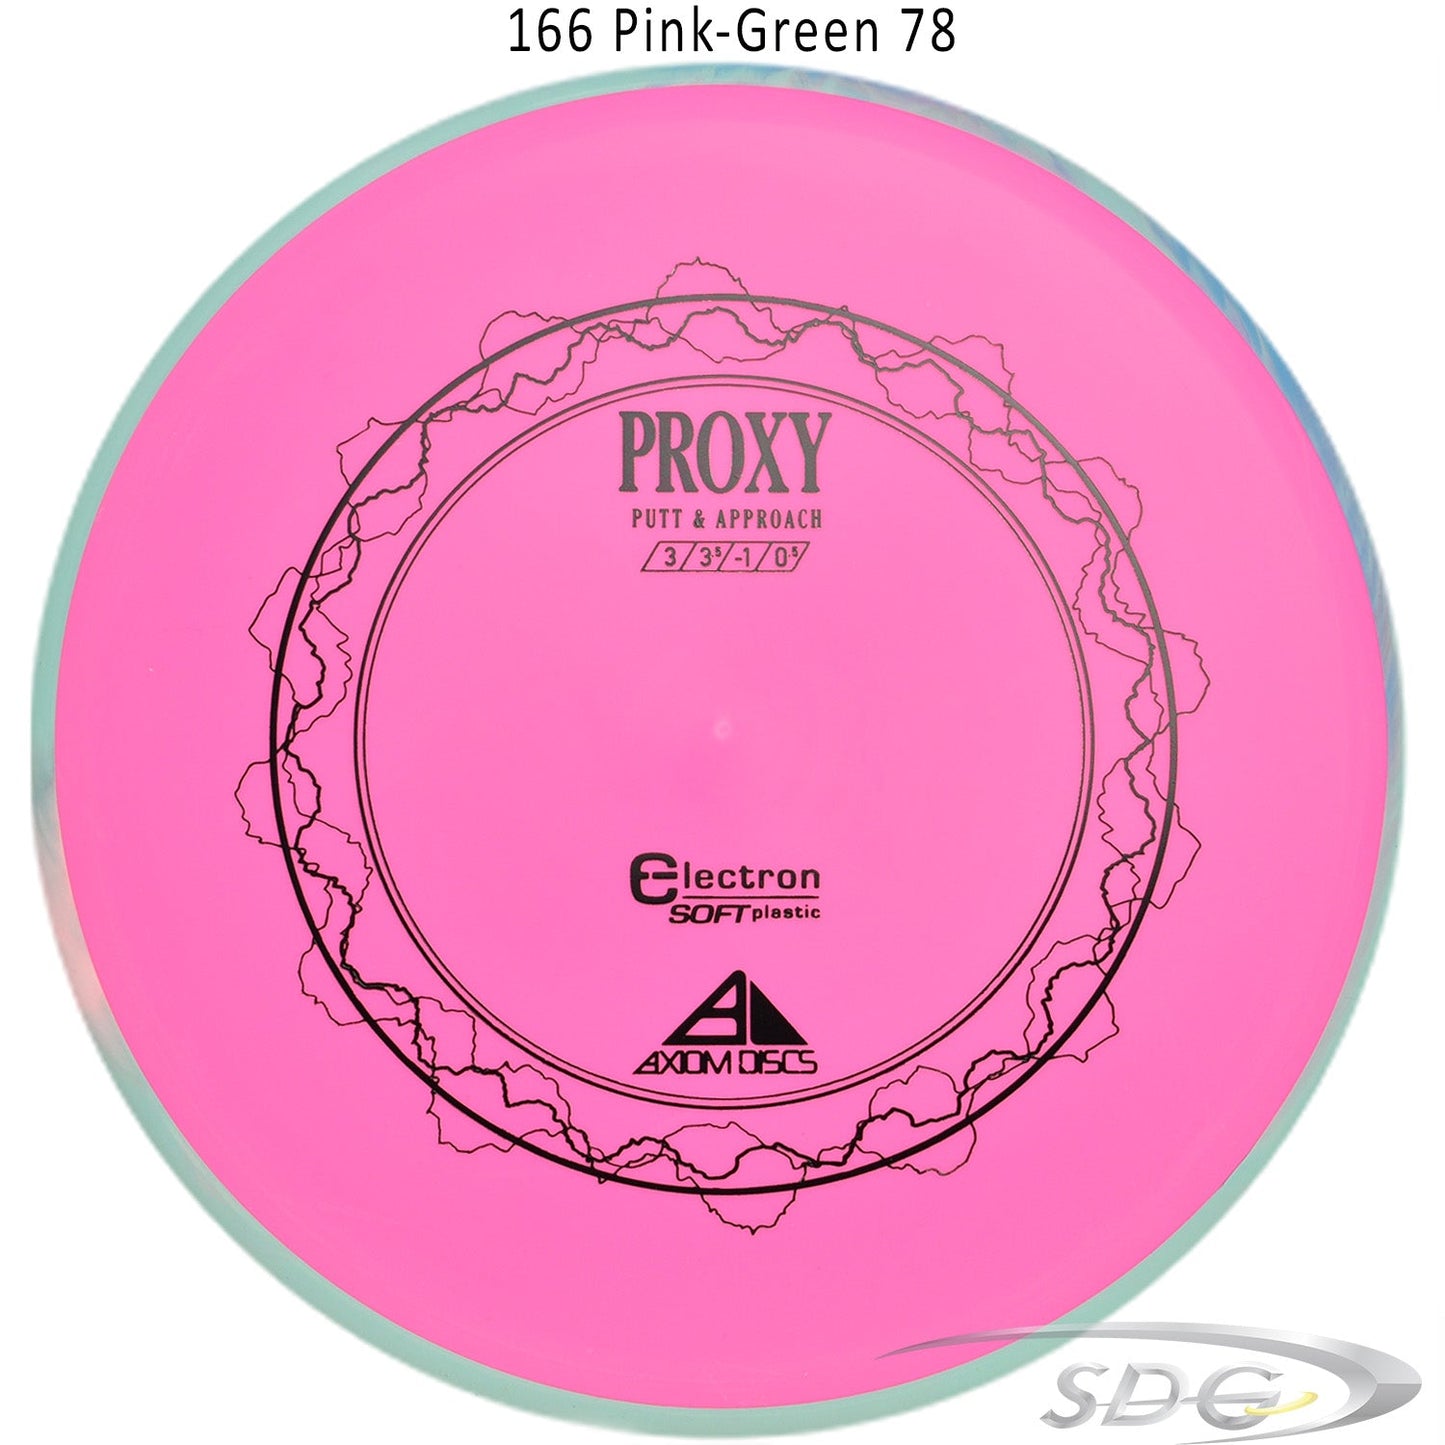 axiom-electron-proxy-soft-disc-golf-putt-approach 166 Pink-Green 78 